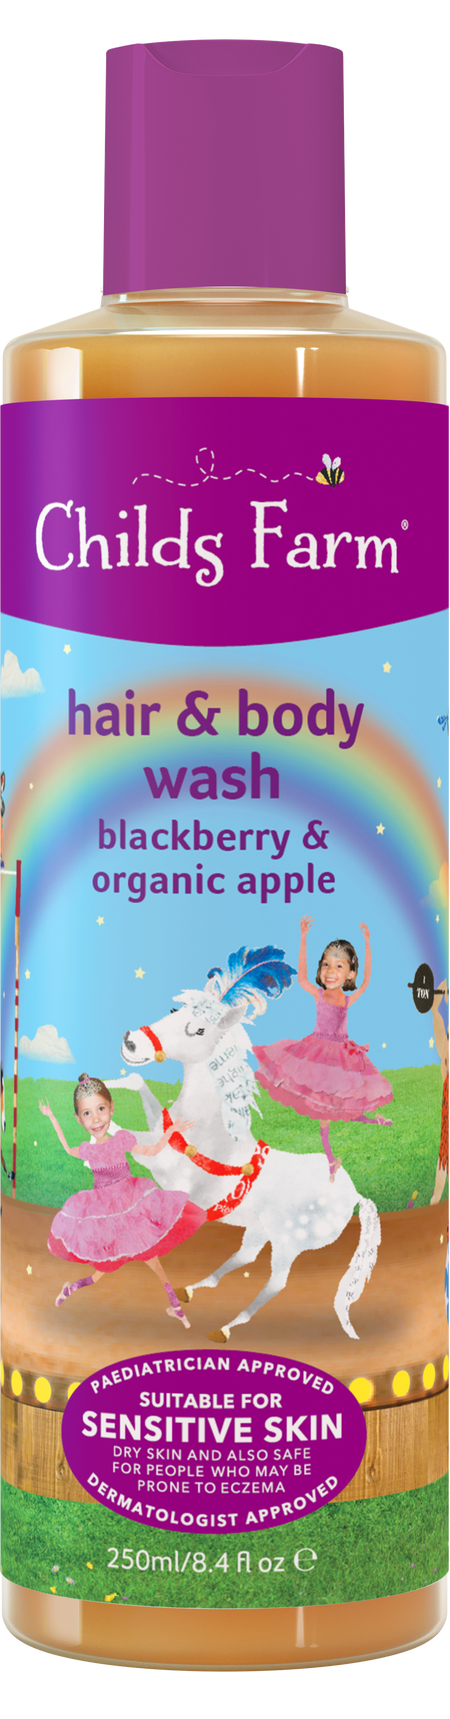 Childs Farm Organic Blackberry and Apple Hair & Body Wash 250ml